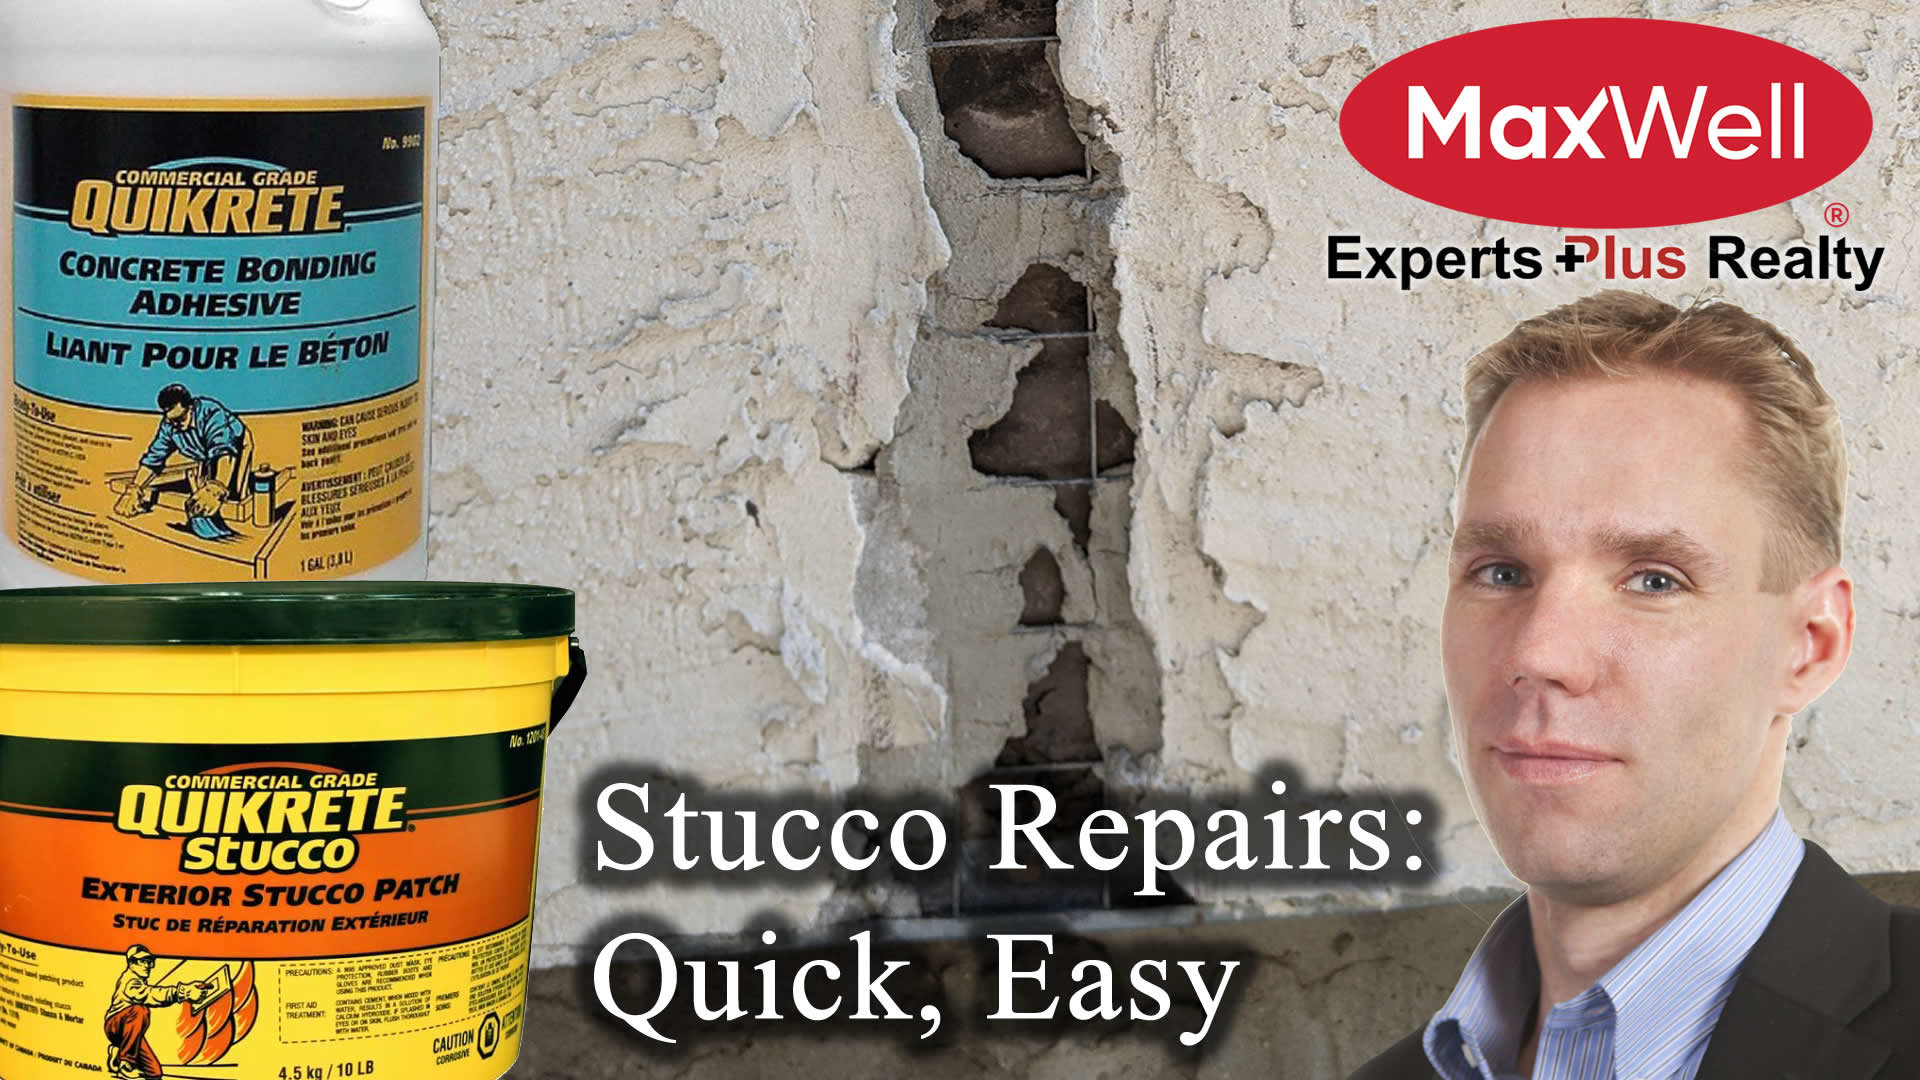 Stucco repairs